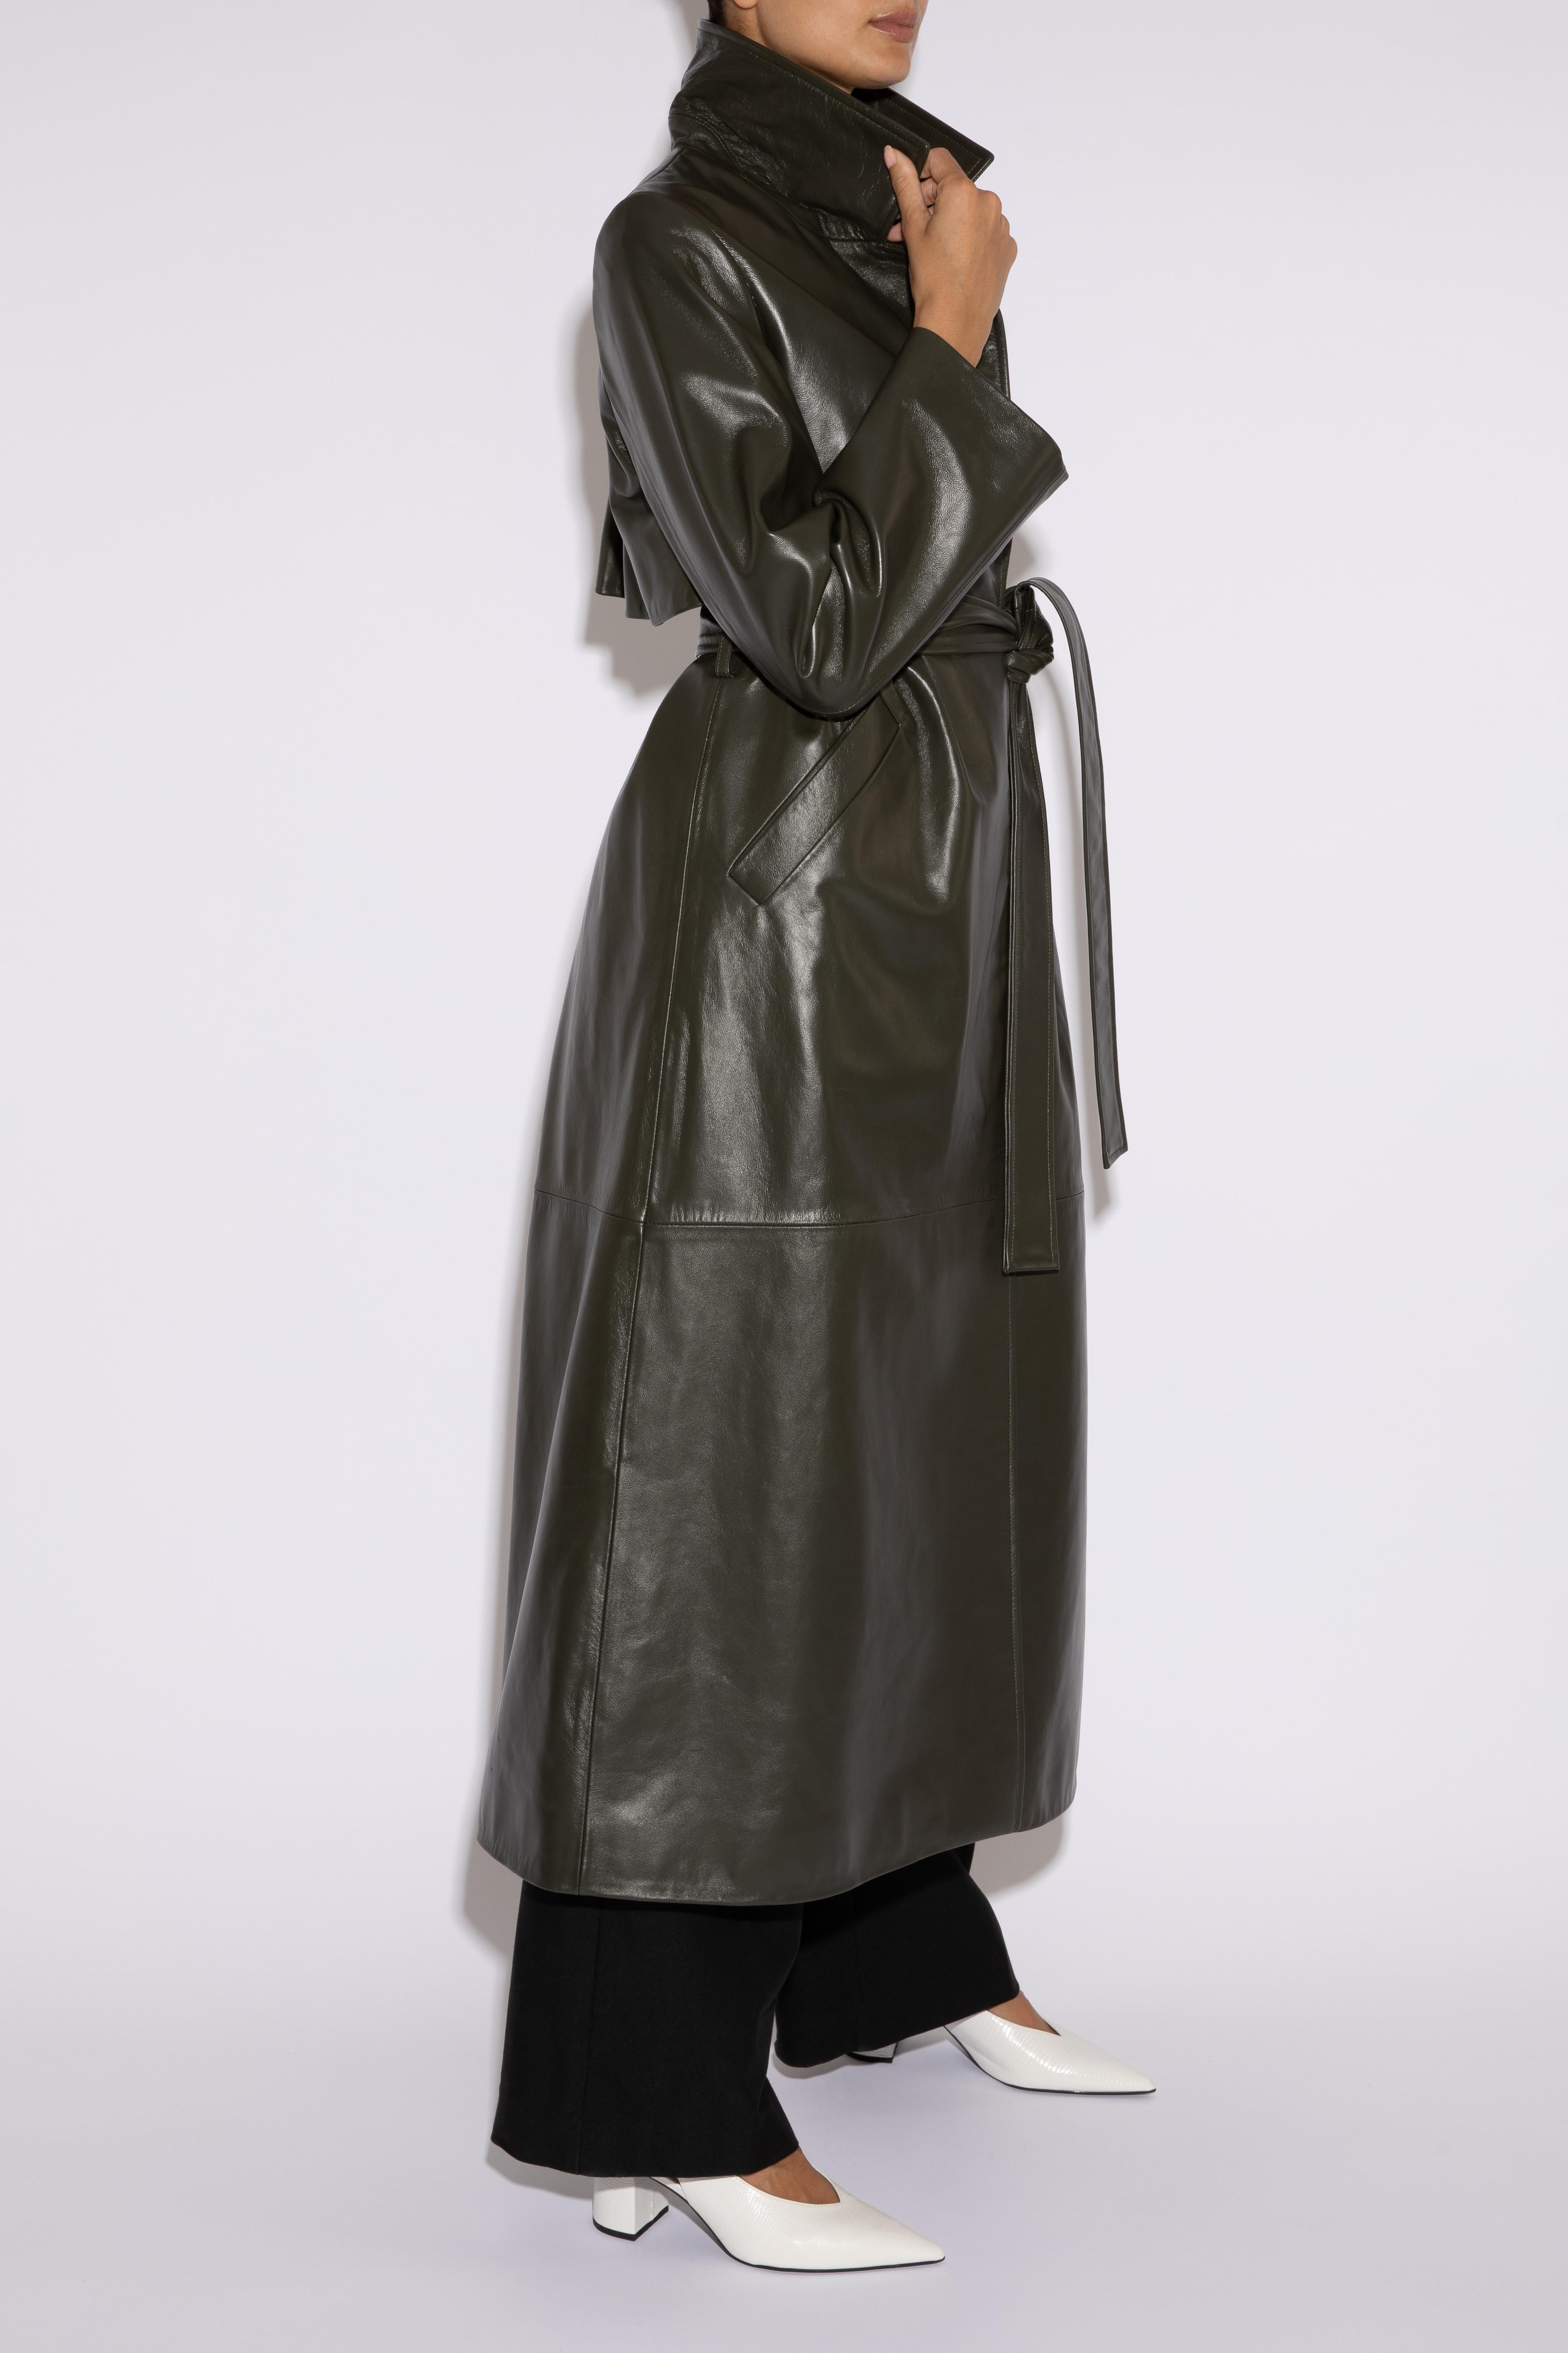 Verheyen London Leather Trench Coat in Dark Khaki Green - Size uk 16 For Sale 1